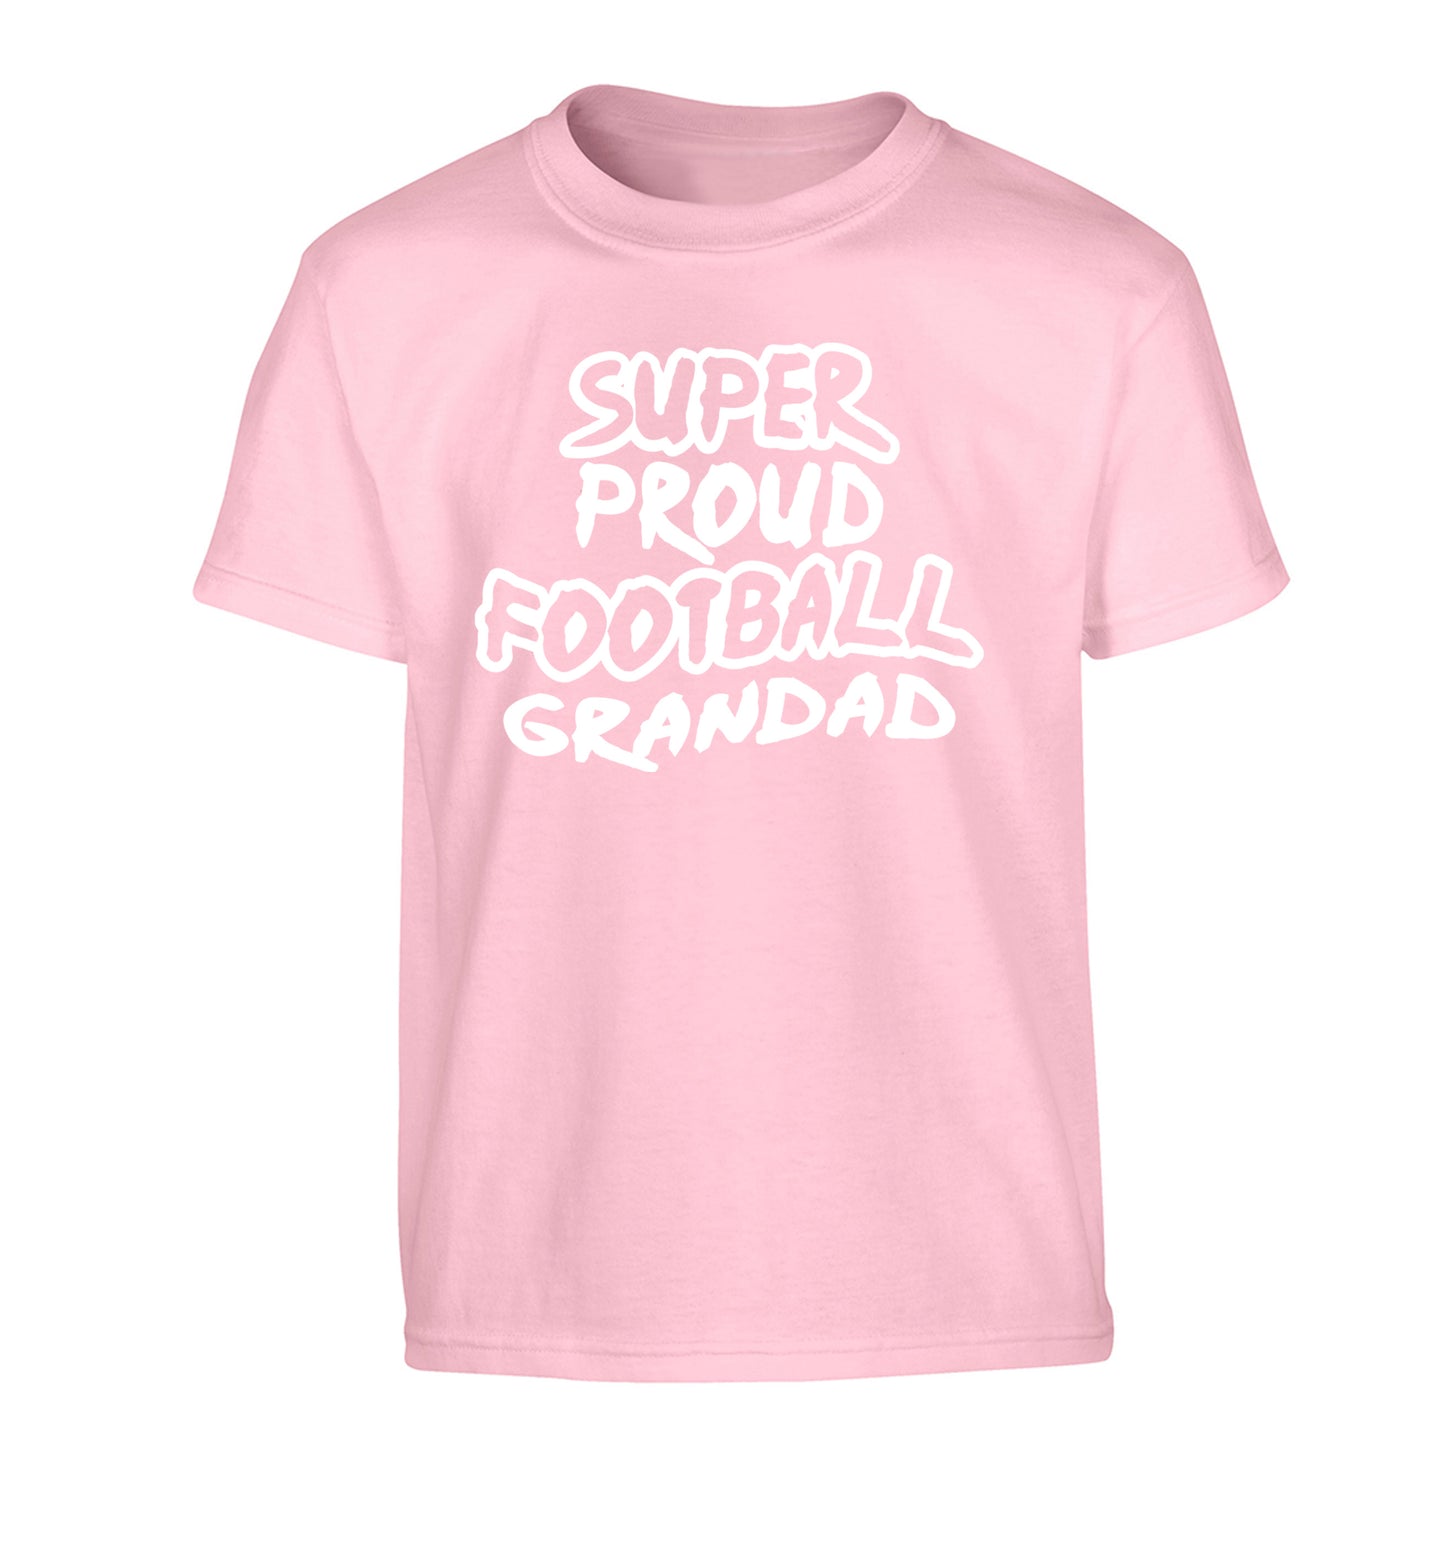 Super proud football grandad Children's light pink Tshirt 12-14 Years